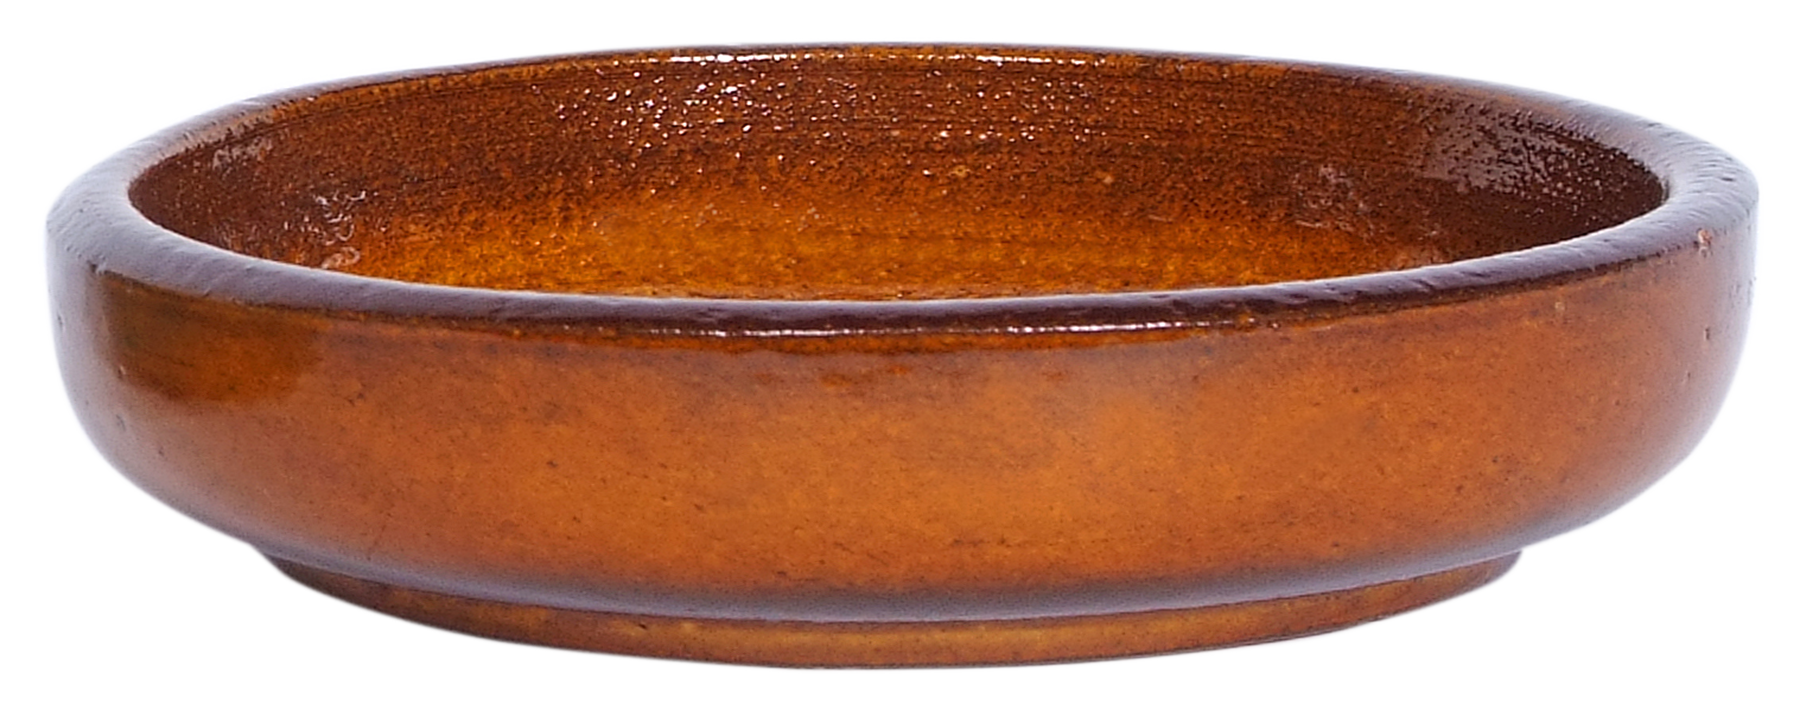 small shallow dish planter in orange brown color